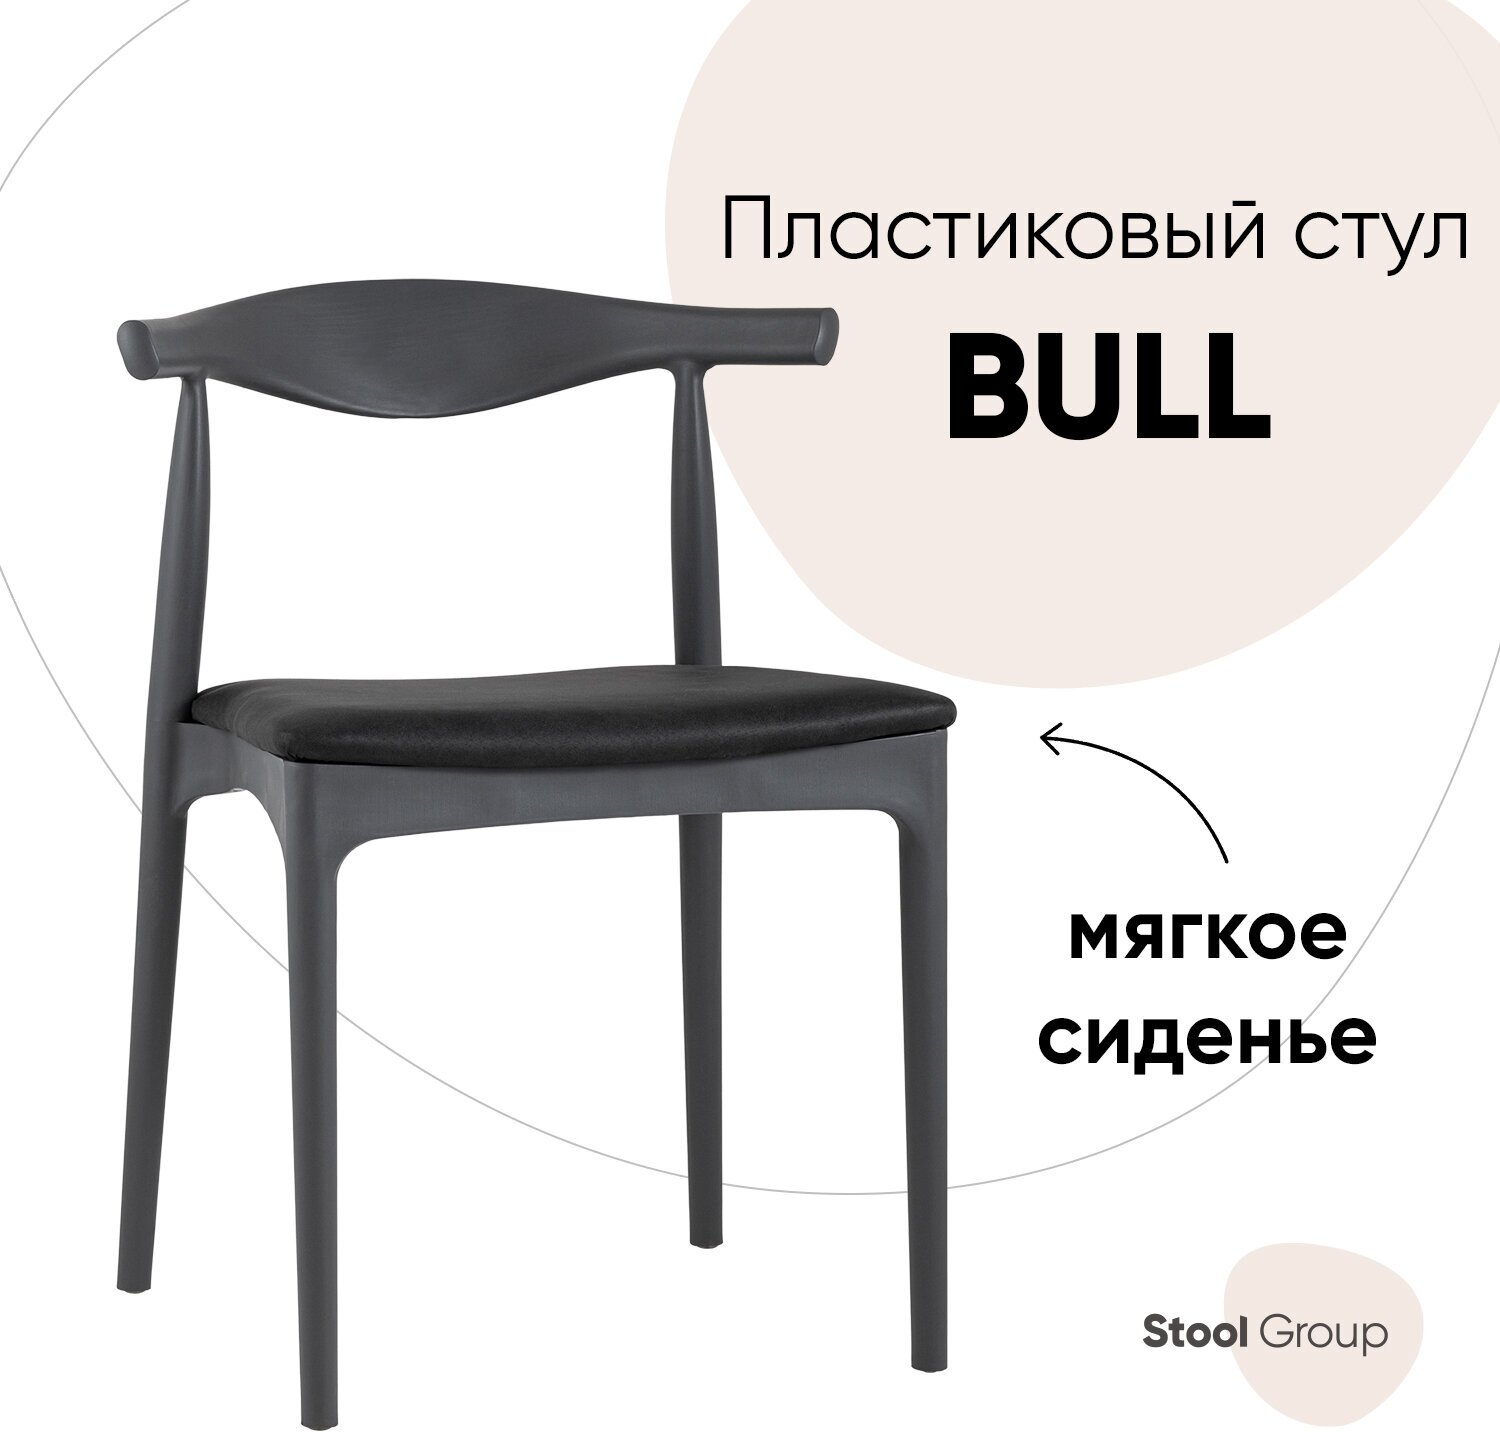 Стул Bull с мягким сиденьем, серый